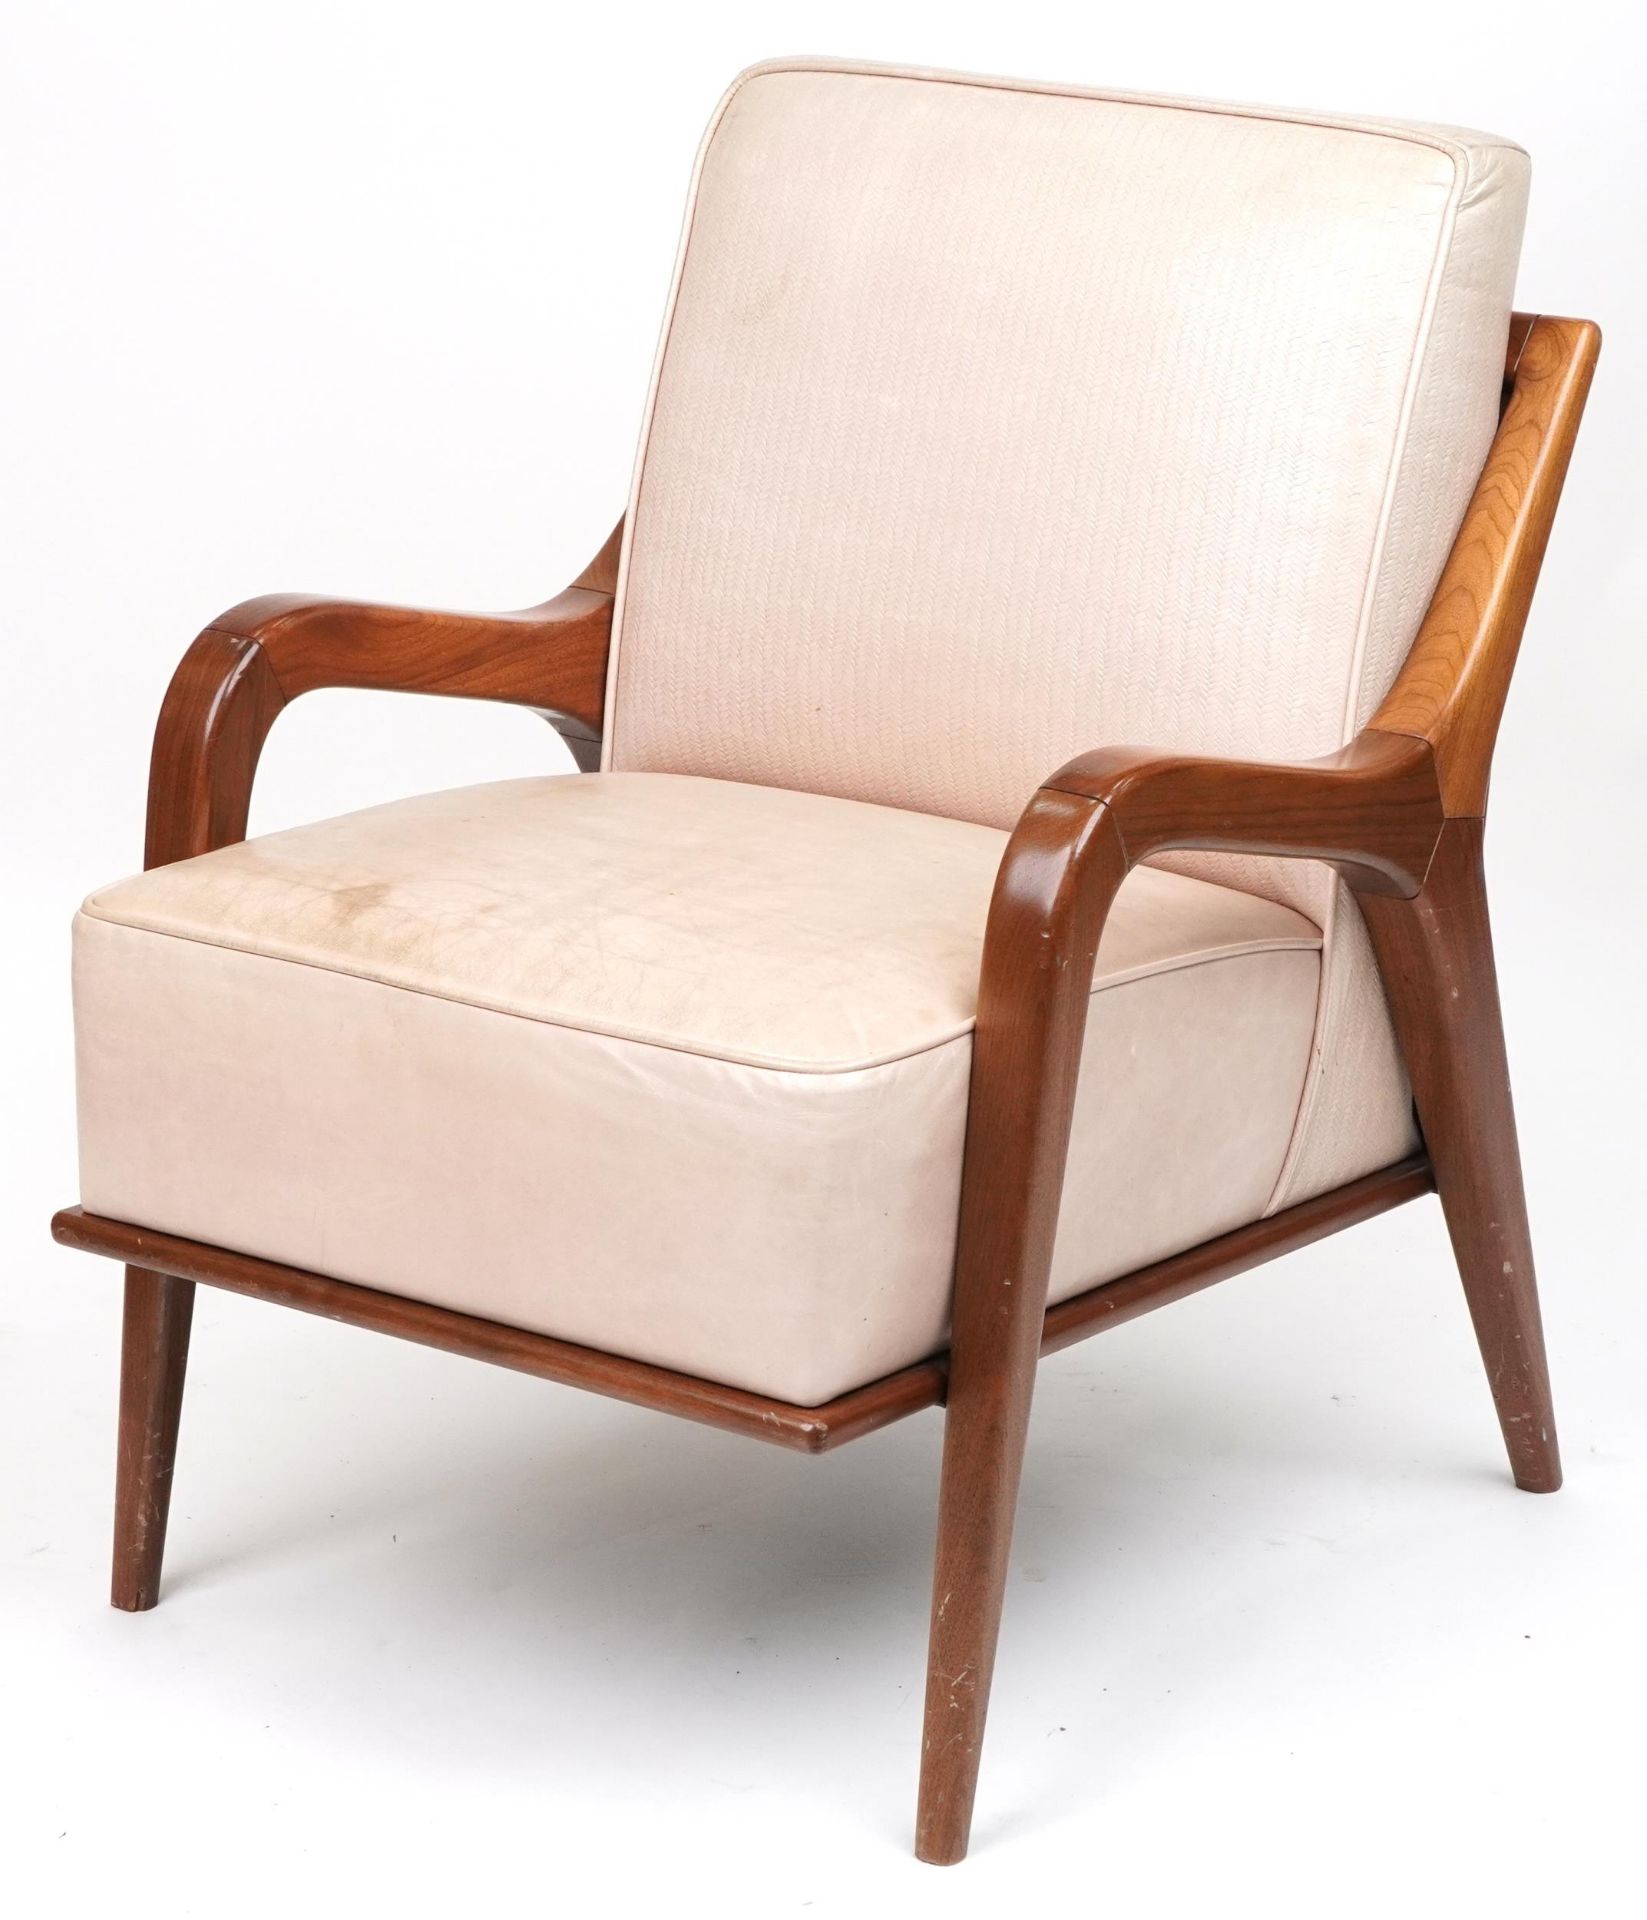 Scandinavian design hardwood lounge chair having a cream upholstered back and seat, 86cm H x 62.